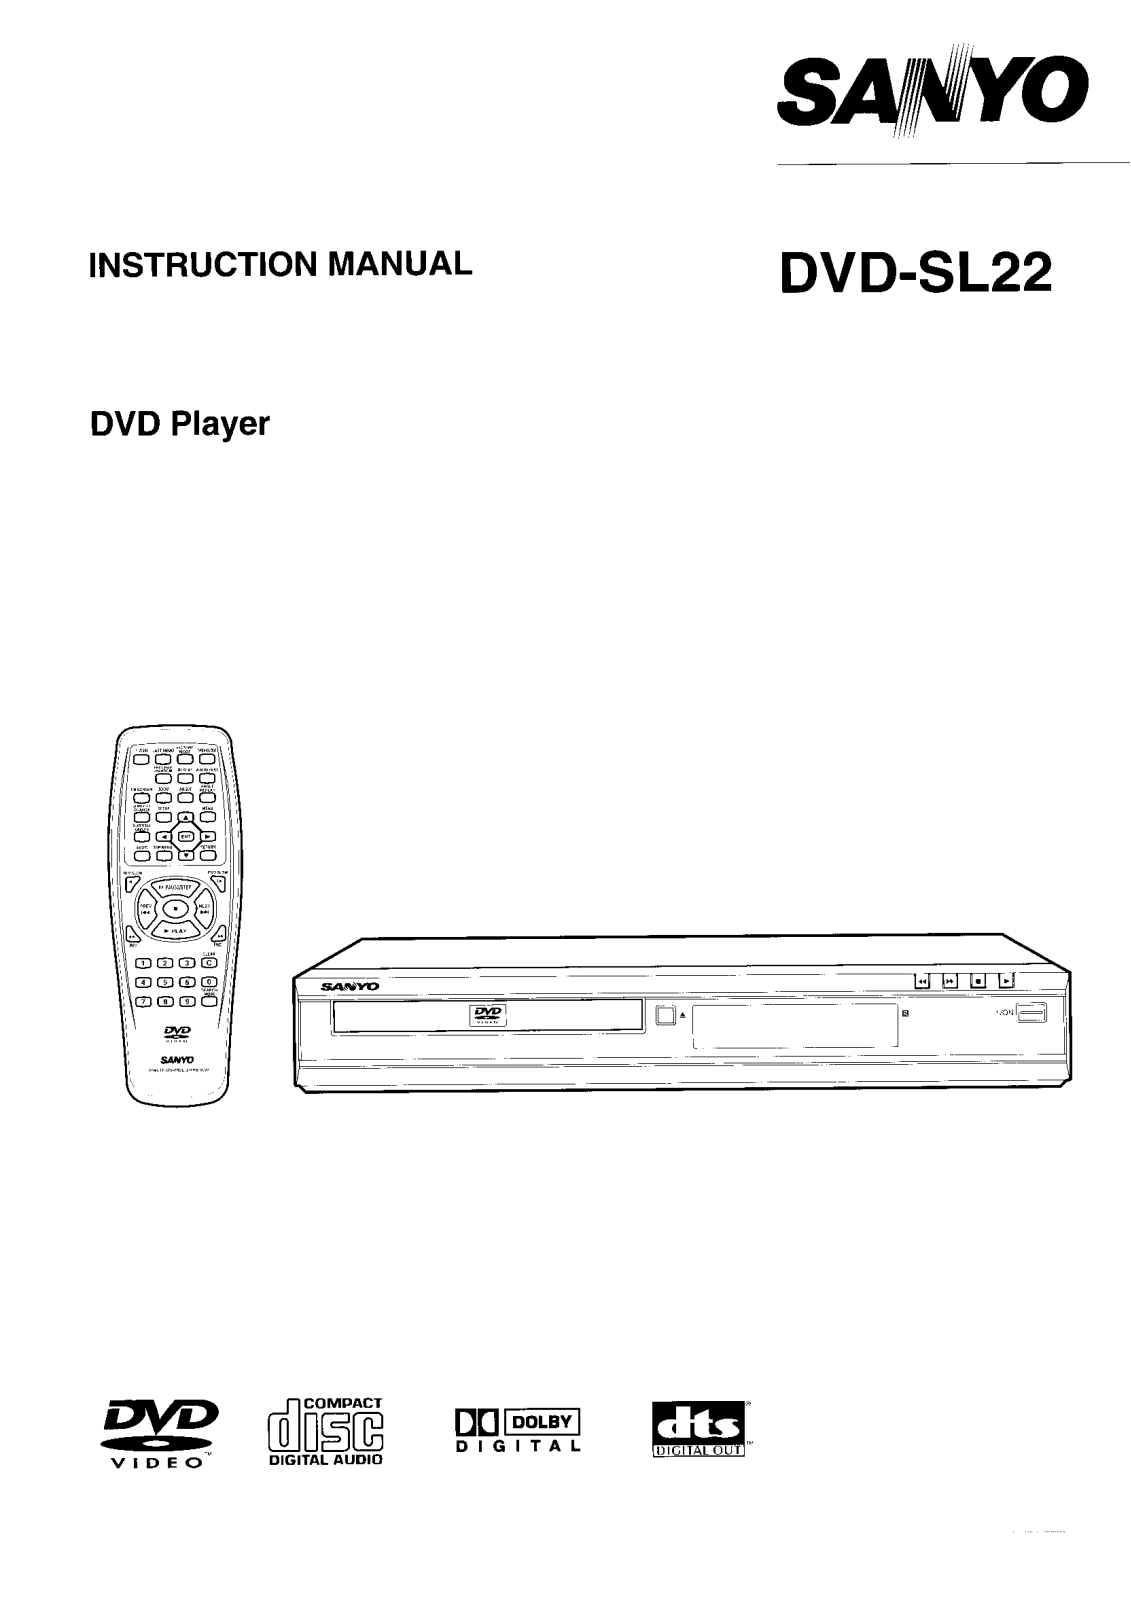 Sanyo DVD-SL22 Instruction Manual